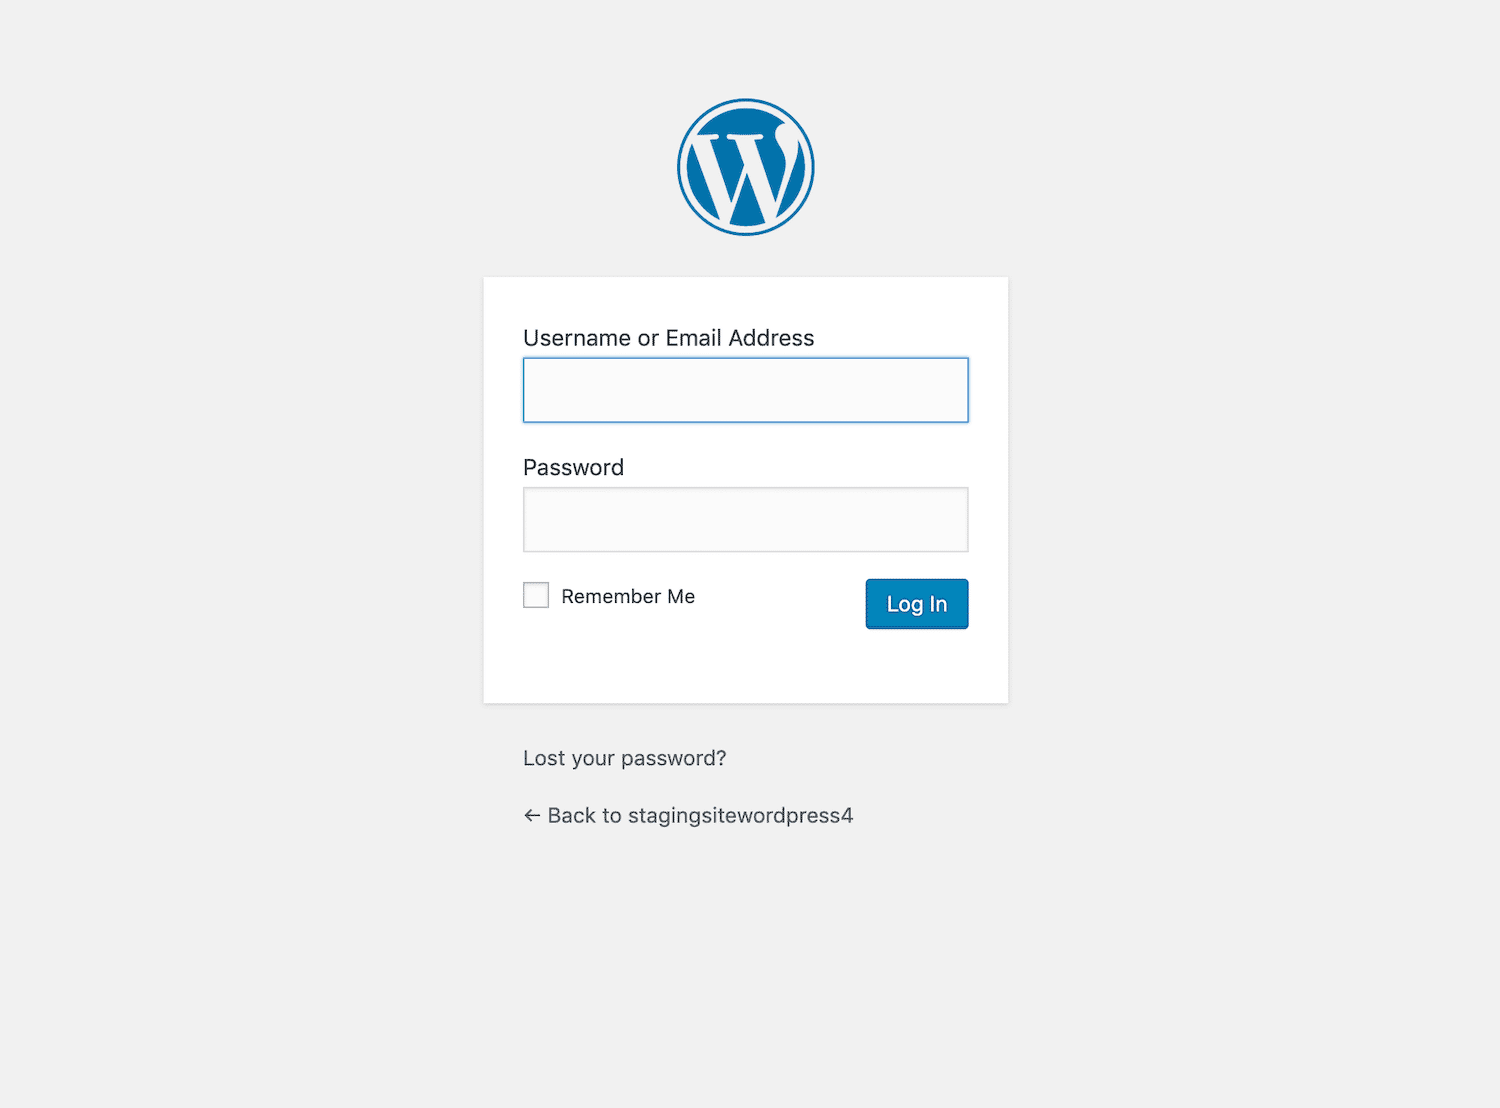 Wordpress login. Модуль авторизации. Пароль в idea. Username or email password. Модуль авторизация ИС.